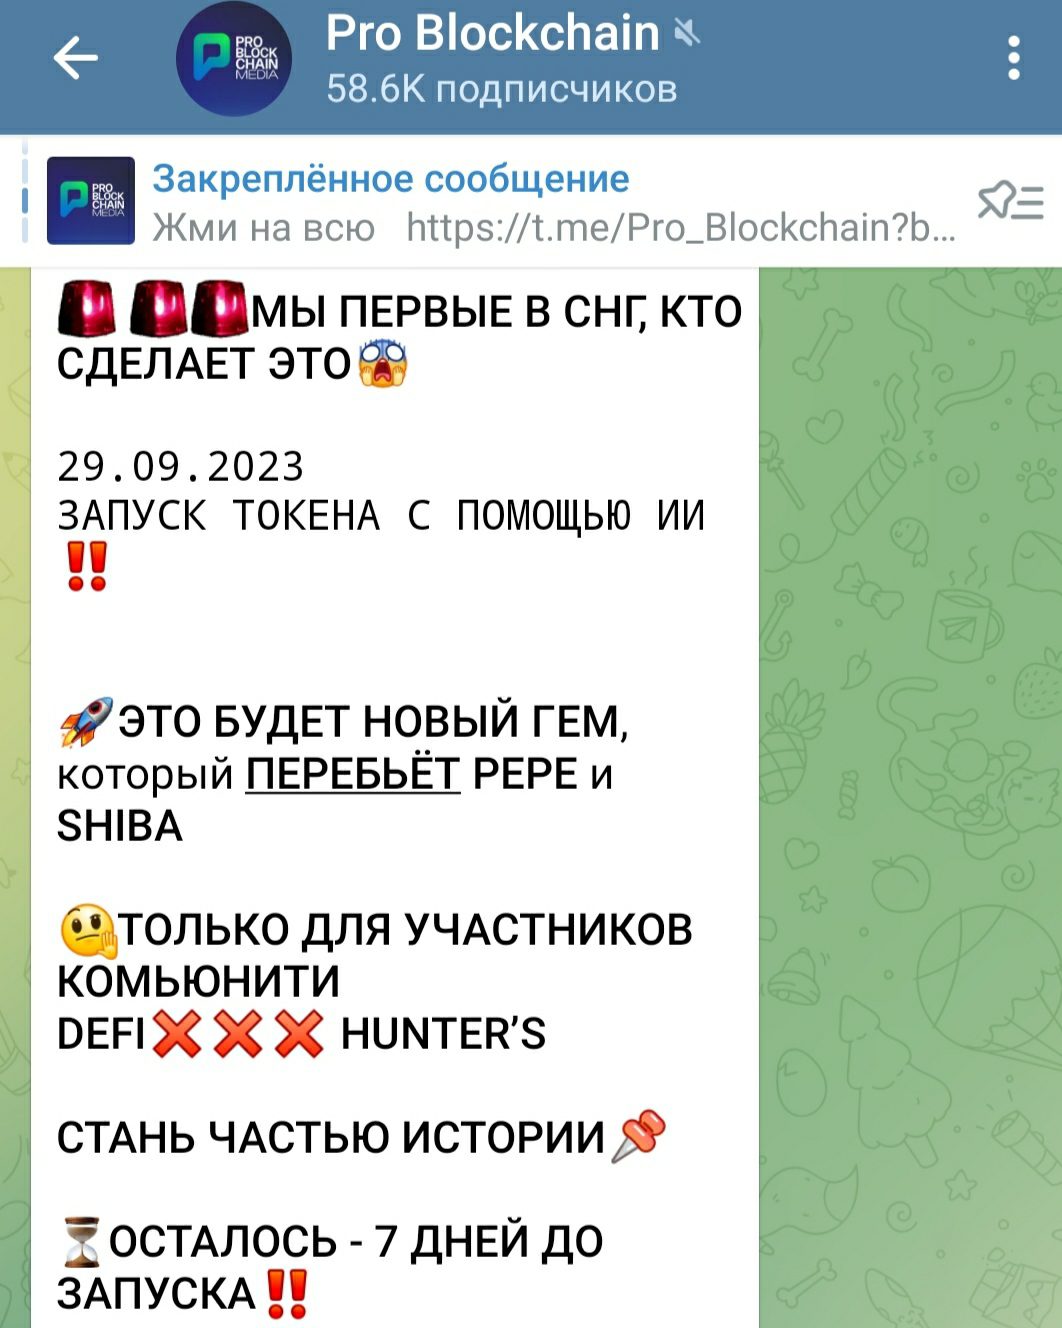 Pro Blockchain Media телеграмм